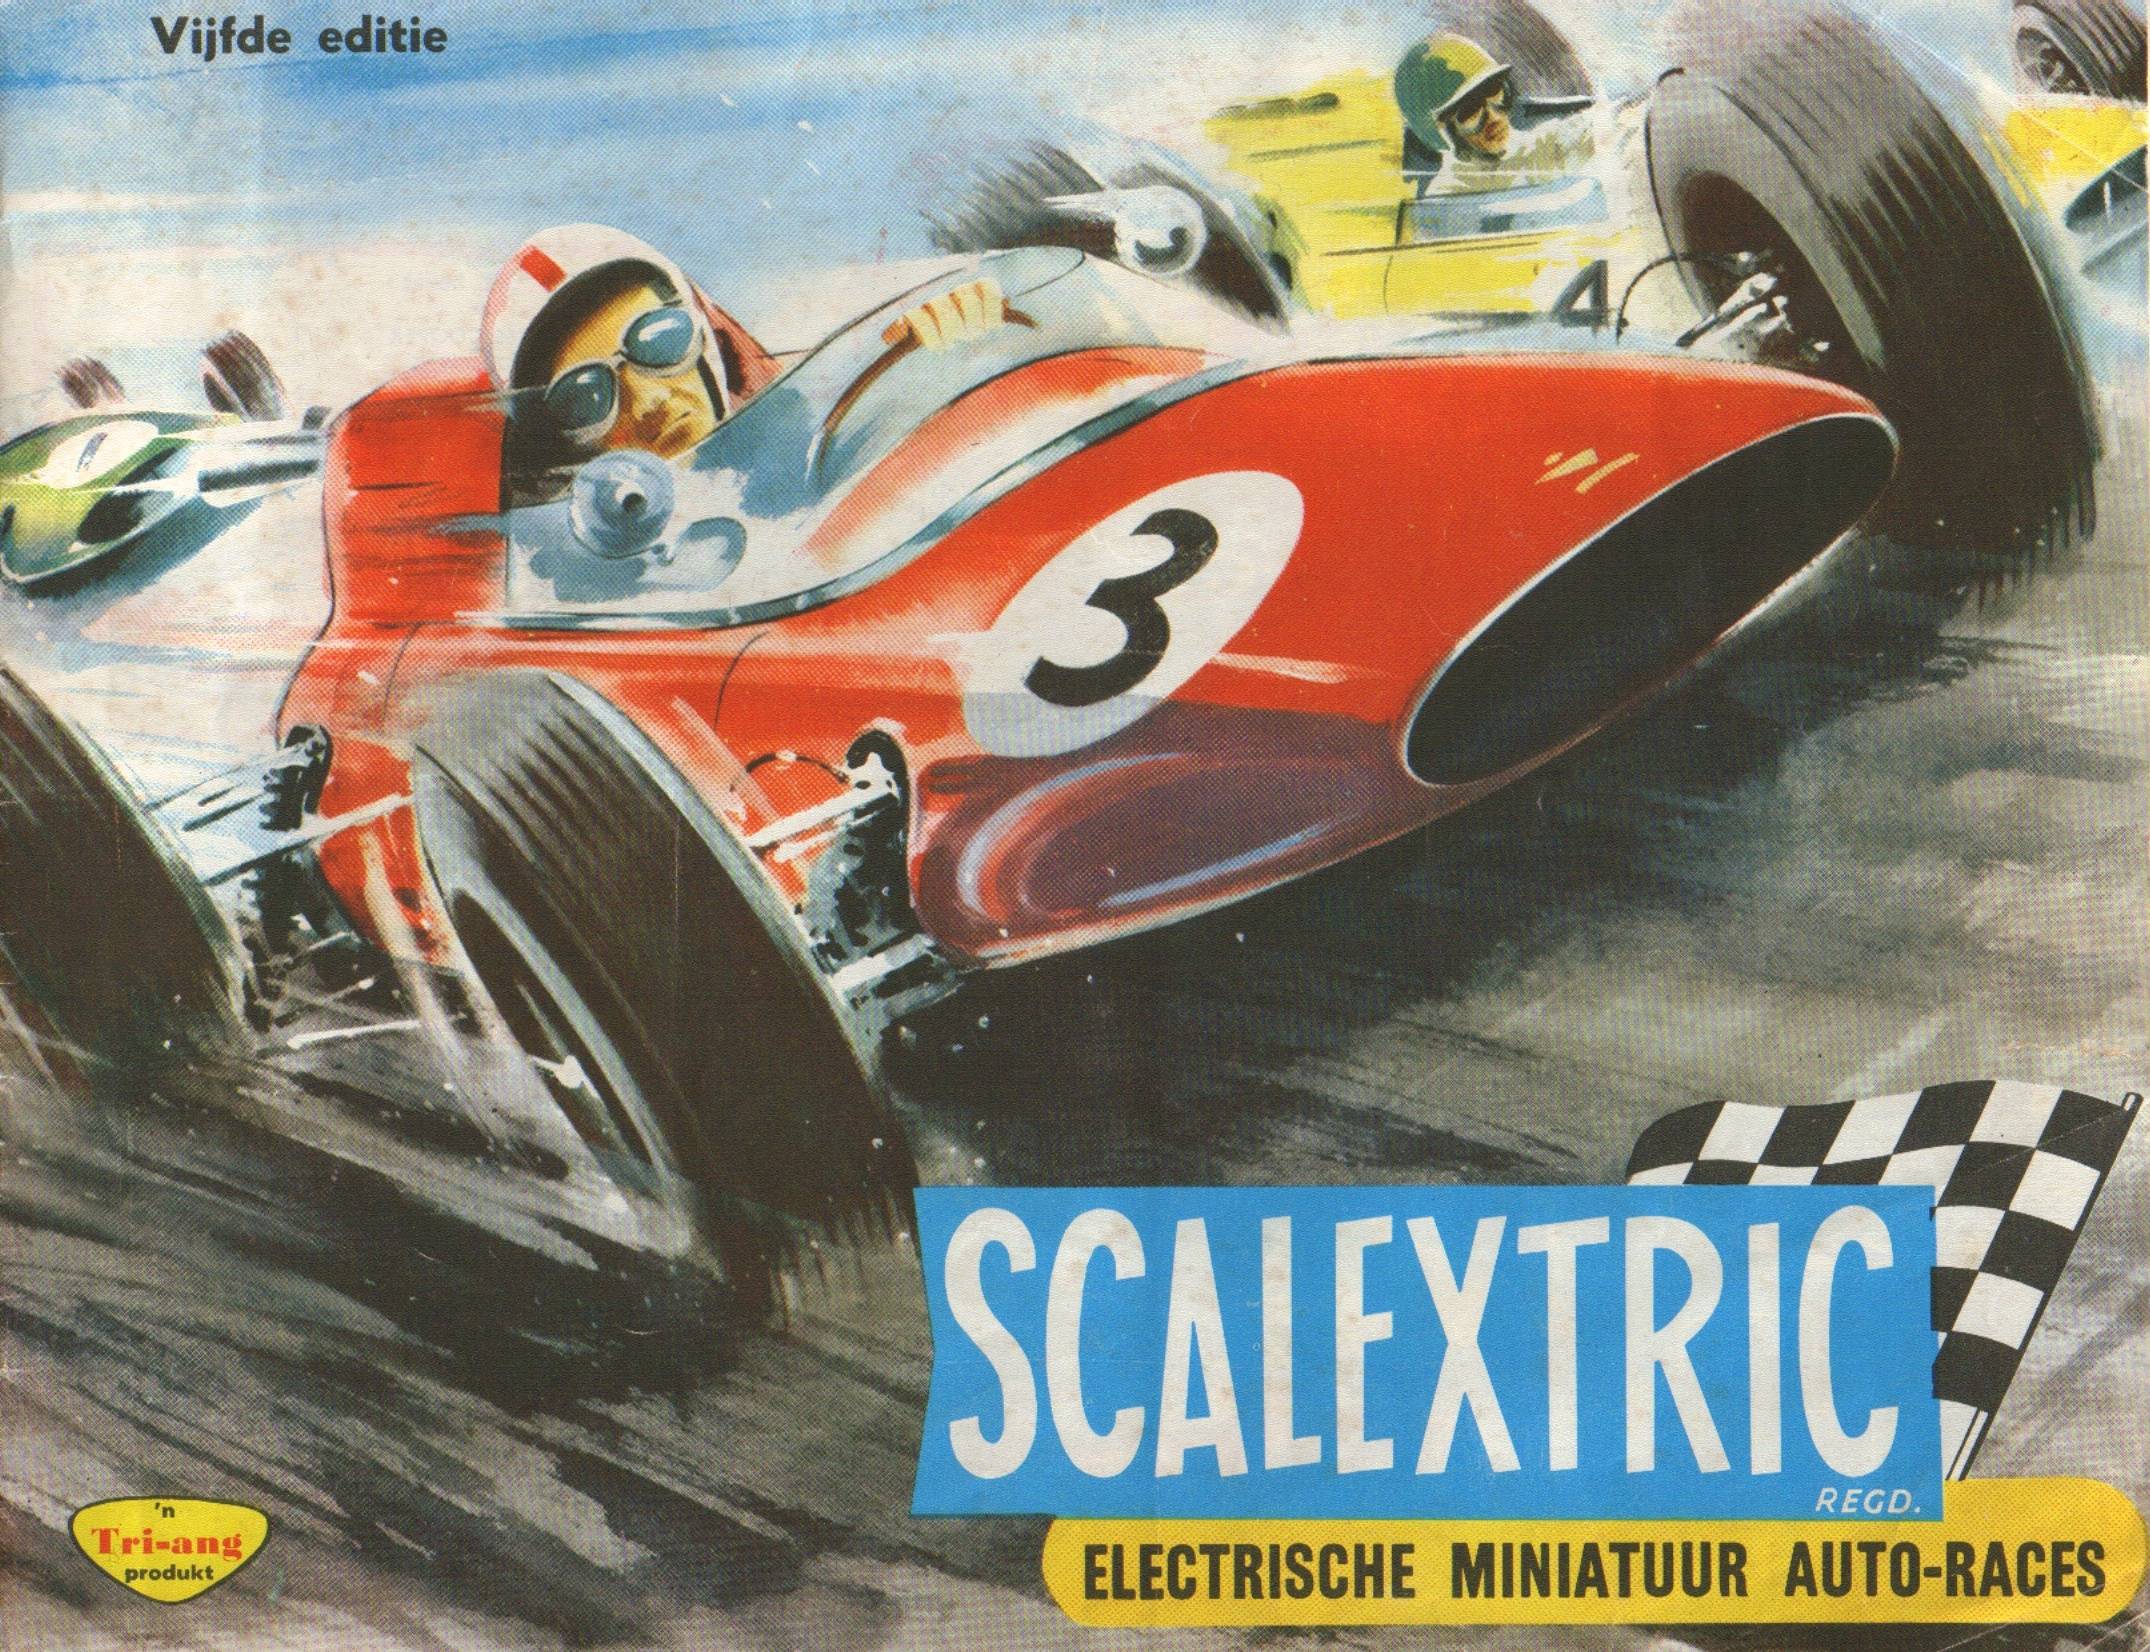 scalextric_electrische_miniatuur_auto-races_catalog_brochures_and_catalogs_123366e4-4894-4e8e-a52c-824f0d797721.jpg